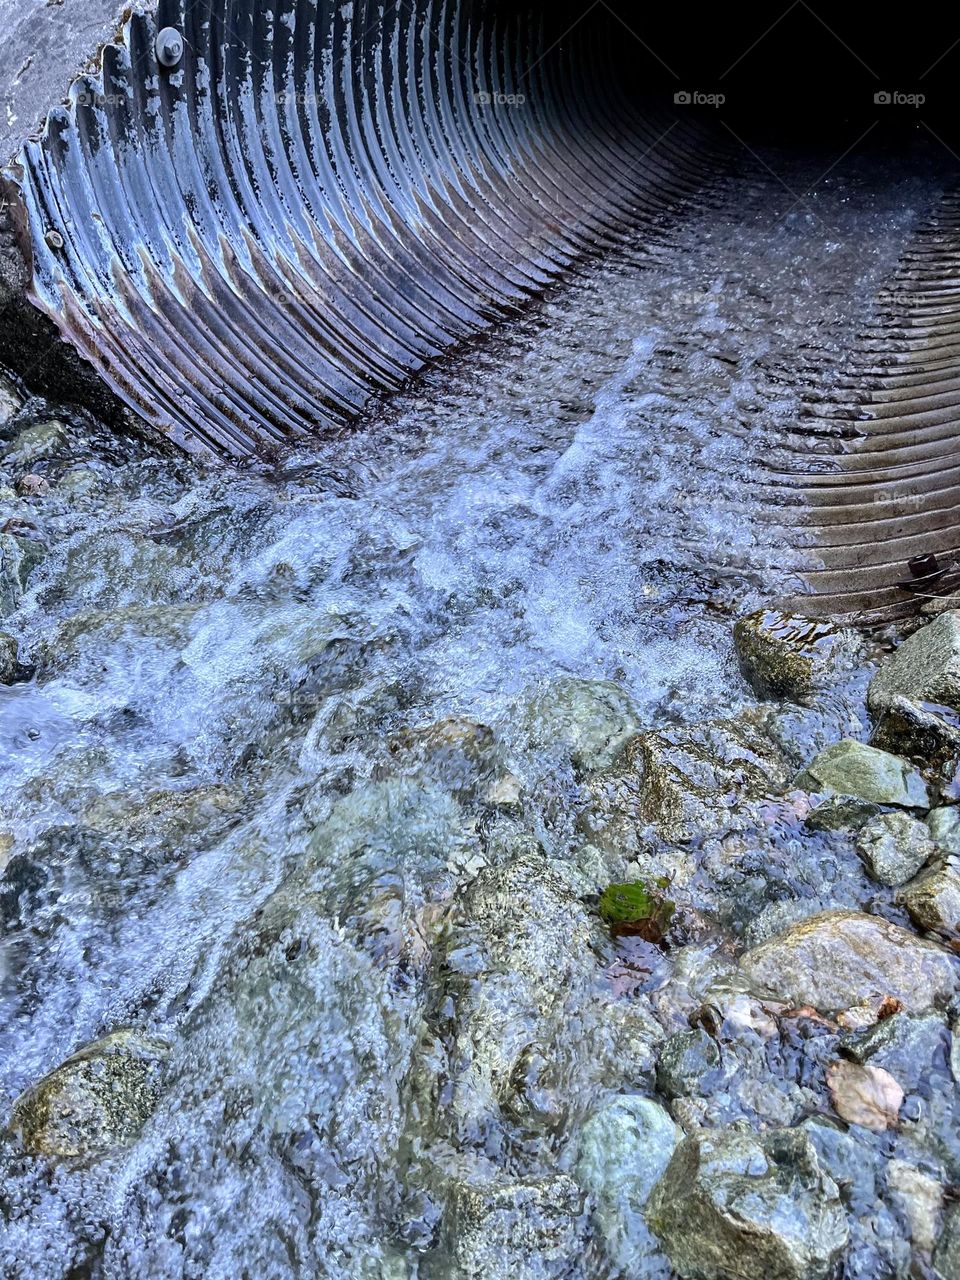 Water running through culvert 